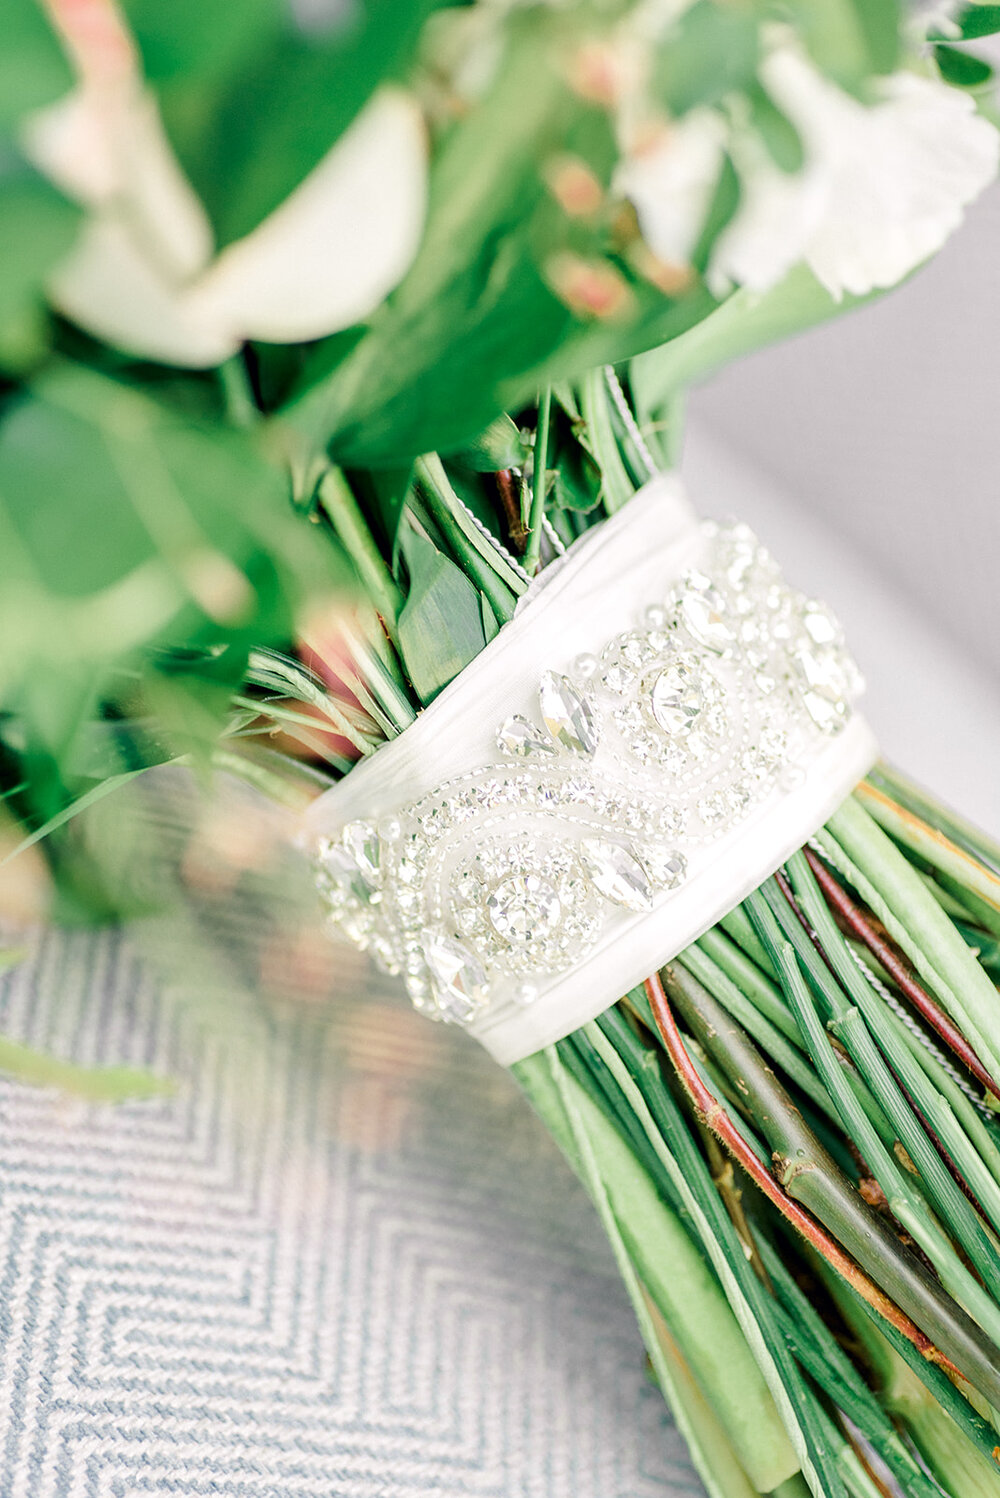 Violette-fleurs-roseville-napa-california-luxury-florist-silverado-resort-and-spa- weddings-by-scott-and-dana-bridal-bouquet-details.jpg